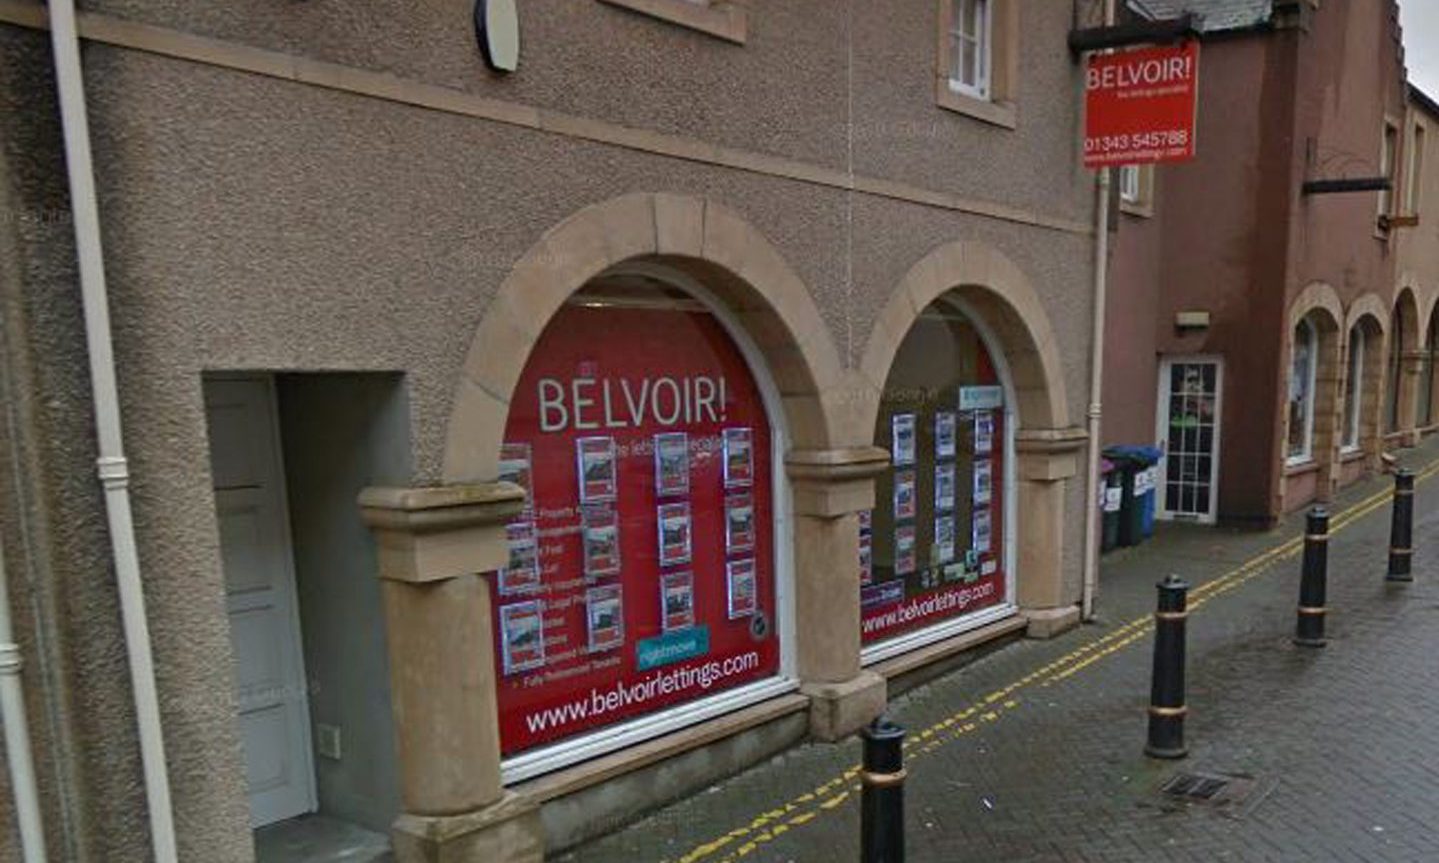 Google Maps image of Belvoir estate agents in Elgin. 